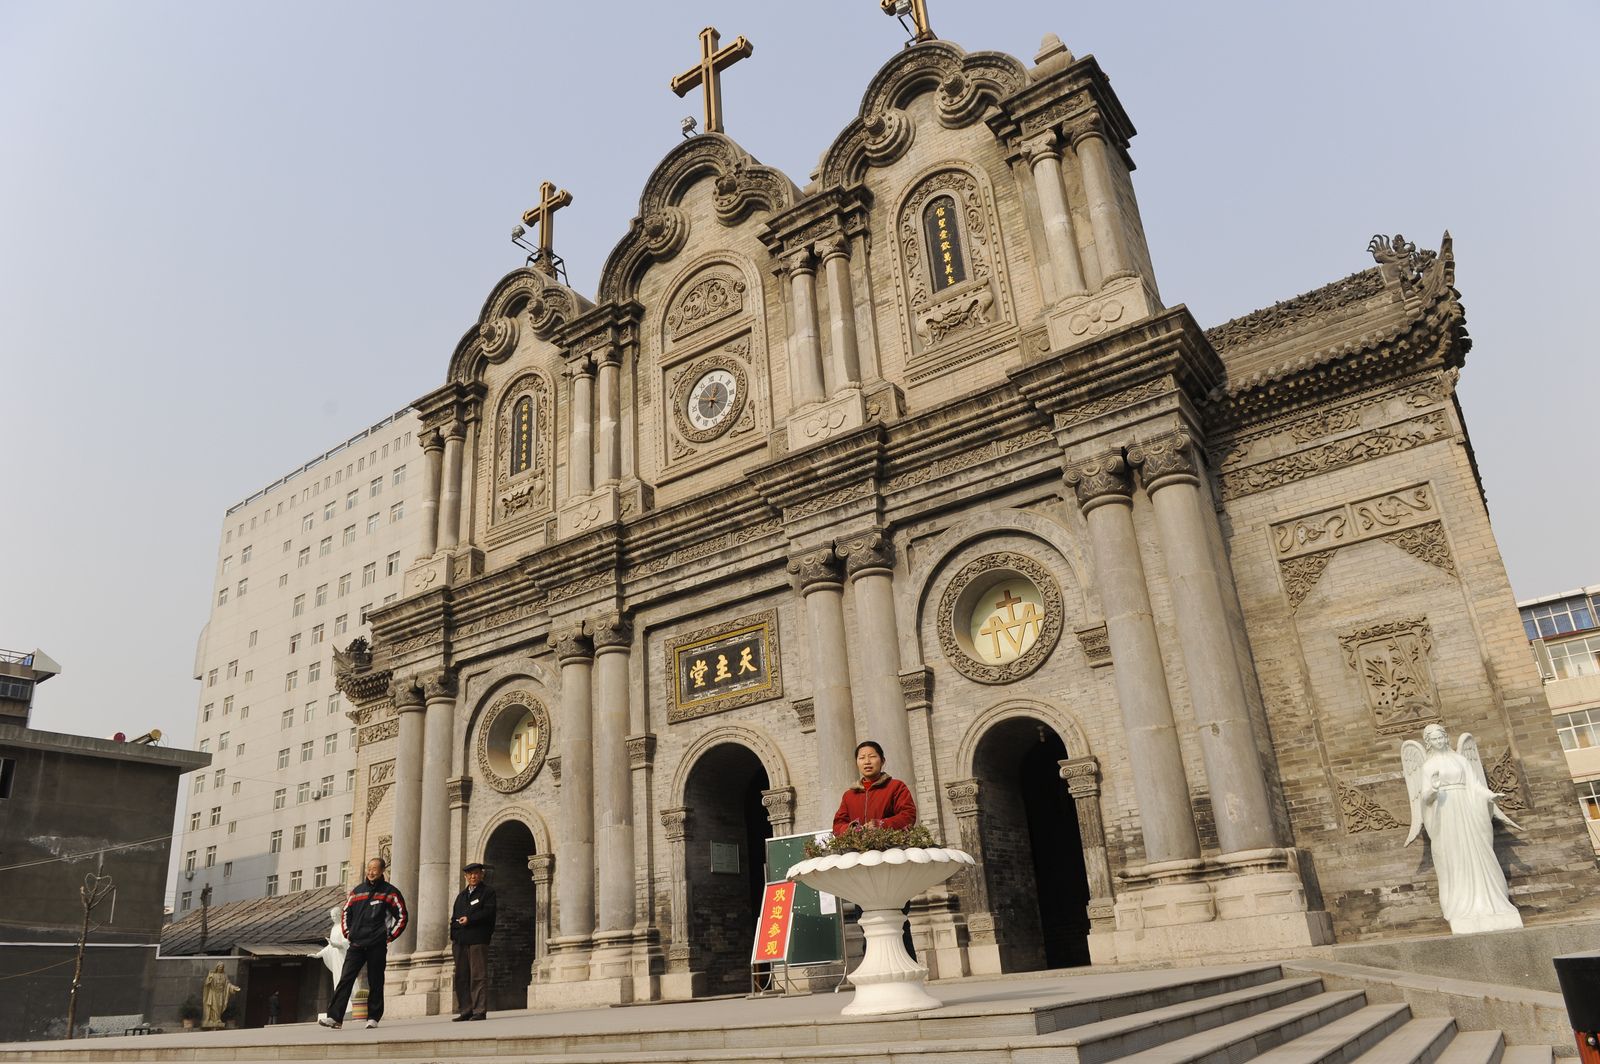 Die St.-Francis-Kathedrale in Xi'an in der Provinz Shaanxi